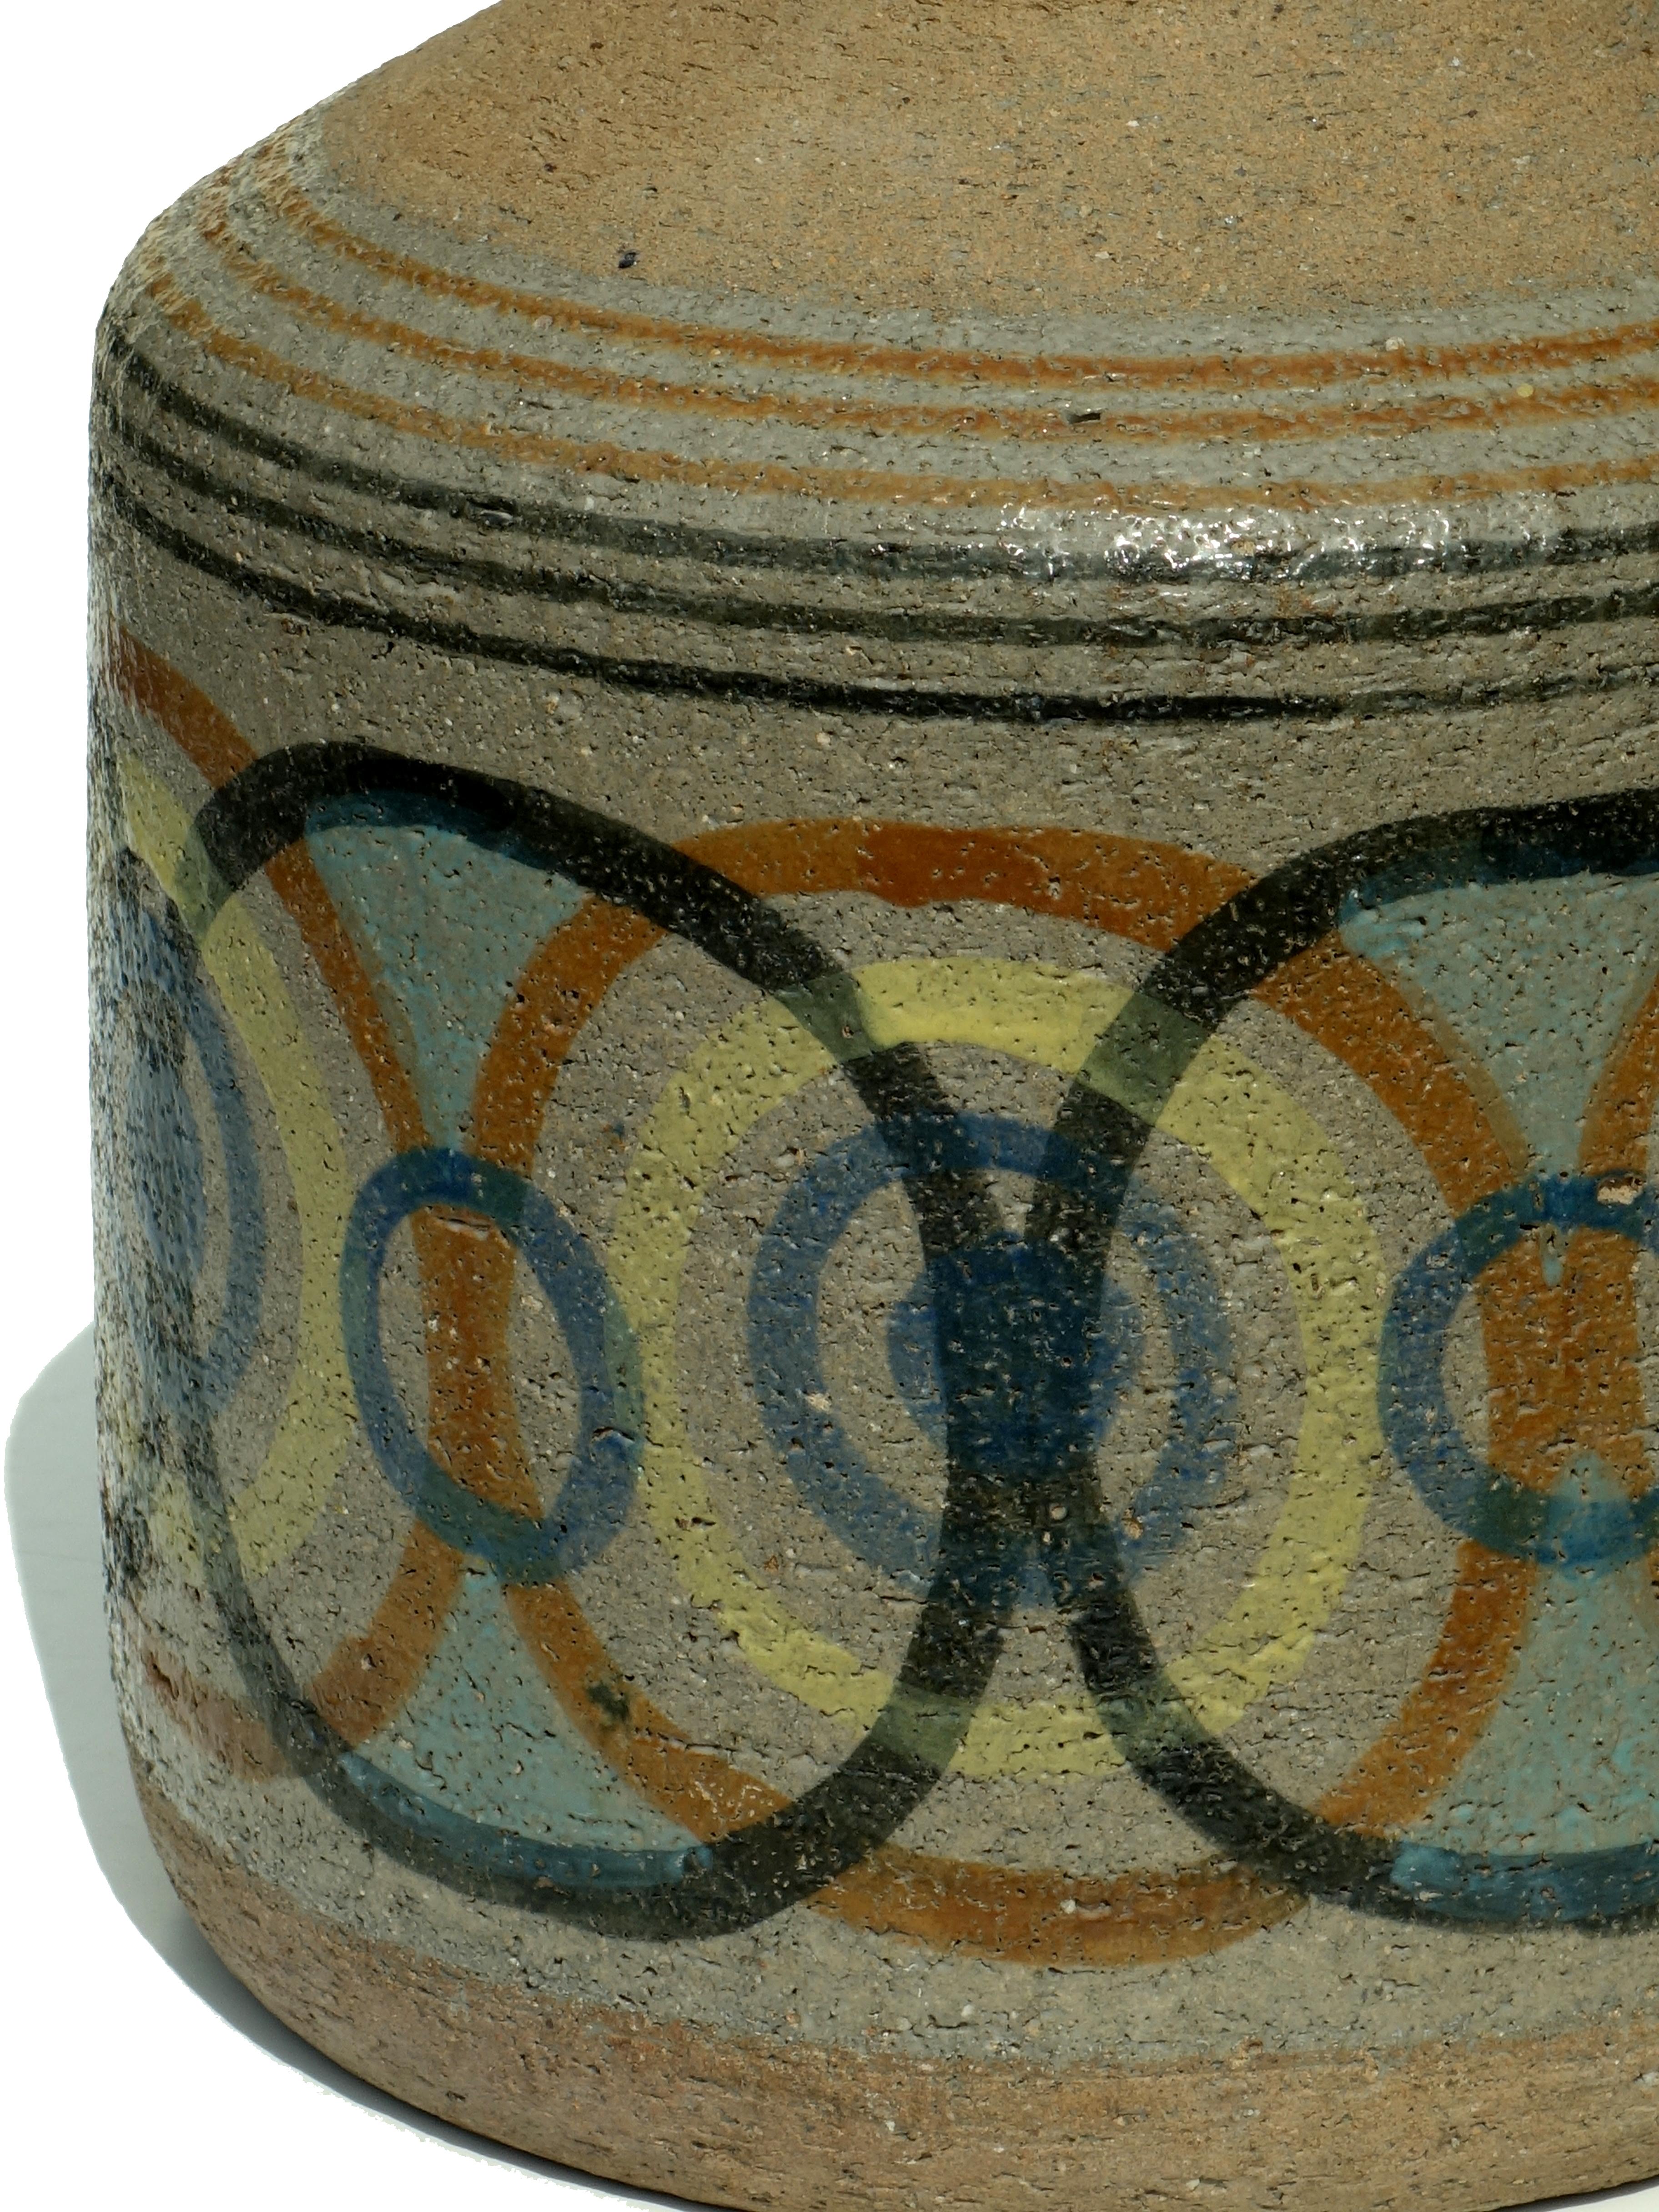 Enameled ceramic vase 
Excellent condition.